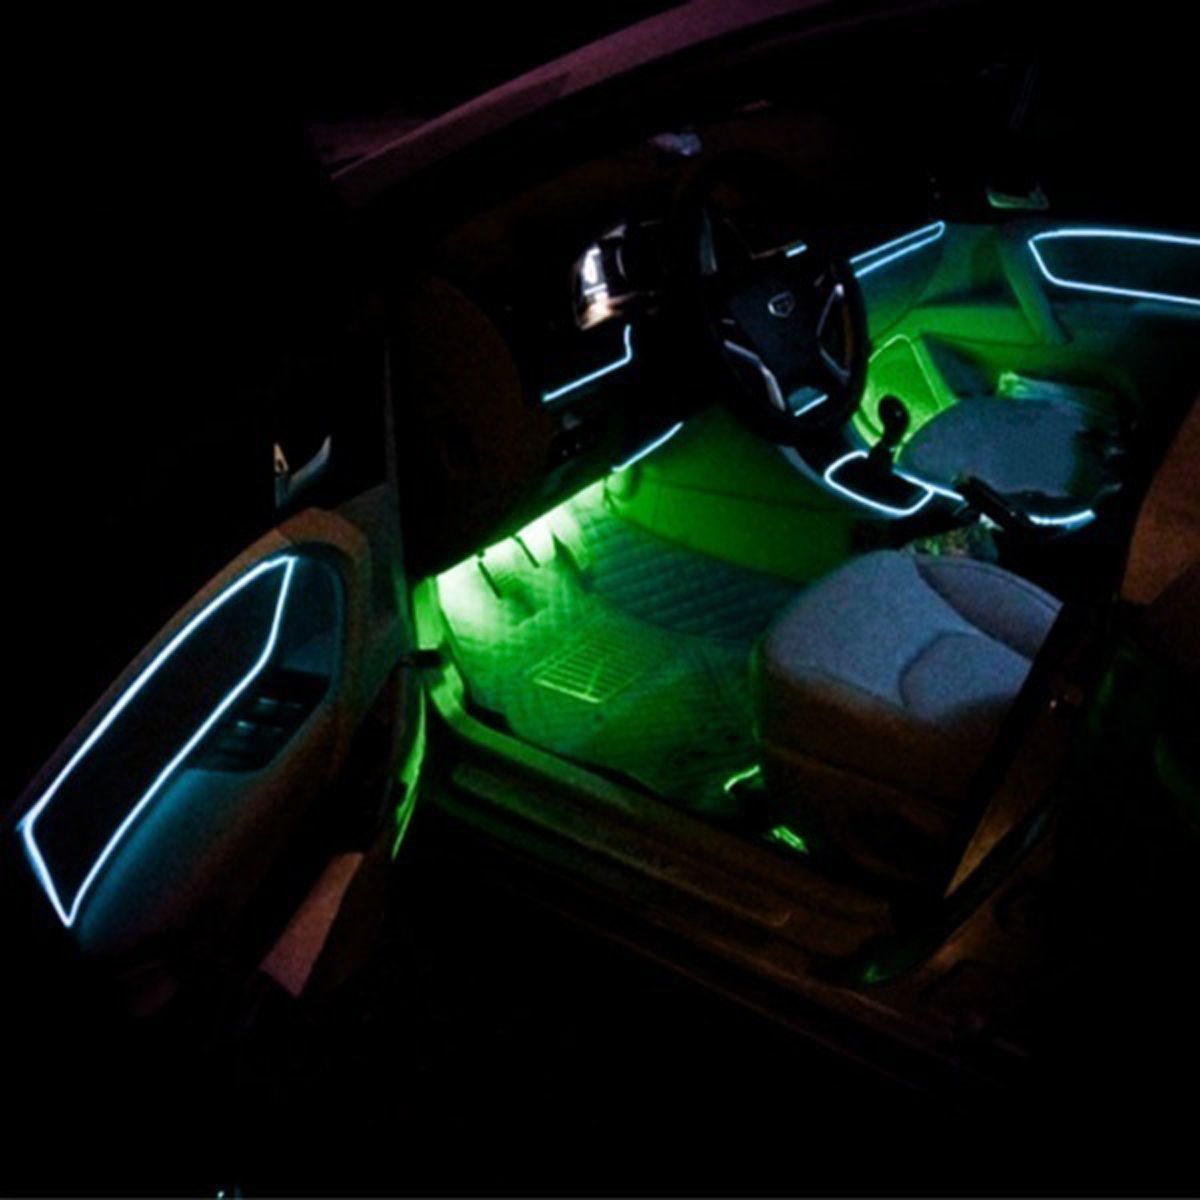 3M-Flexible-Neon-EL-Wire-Light-Atmosphere-Car-Strips-Lamp-Interior-Decoration-Strips-Lighting--DC12V-1623141